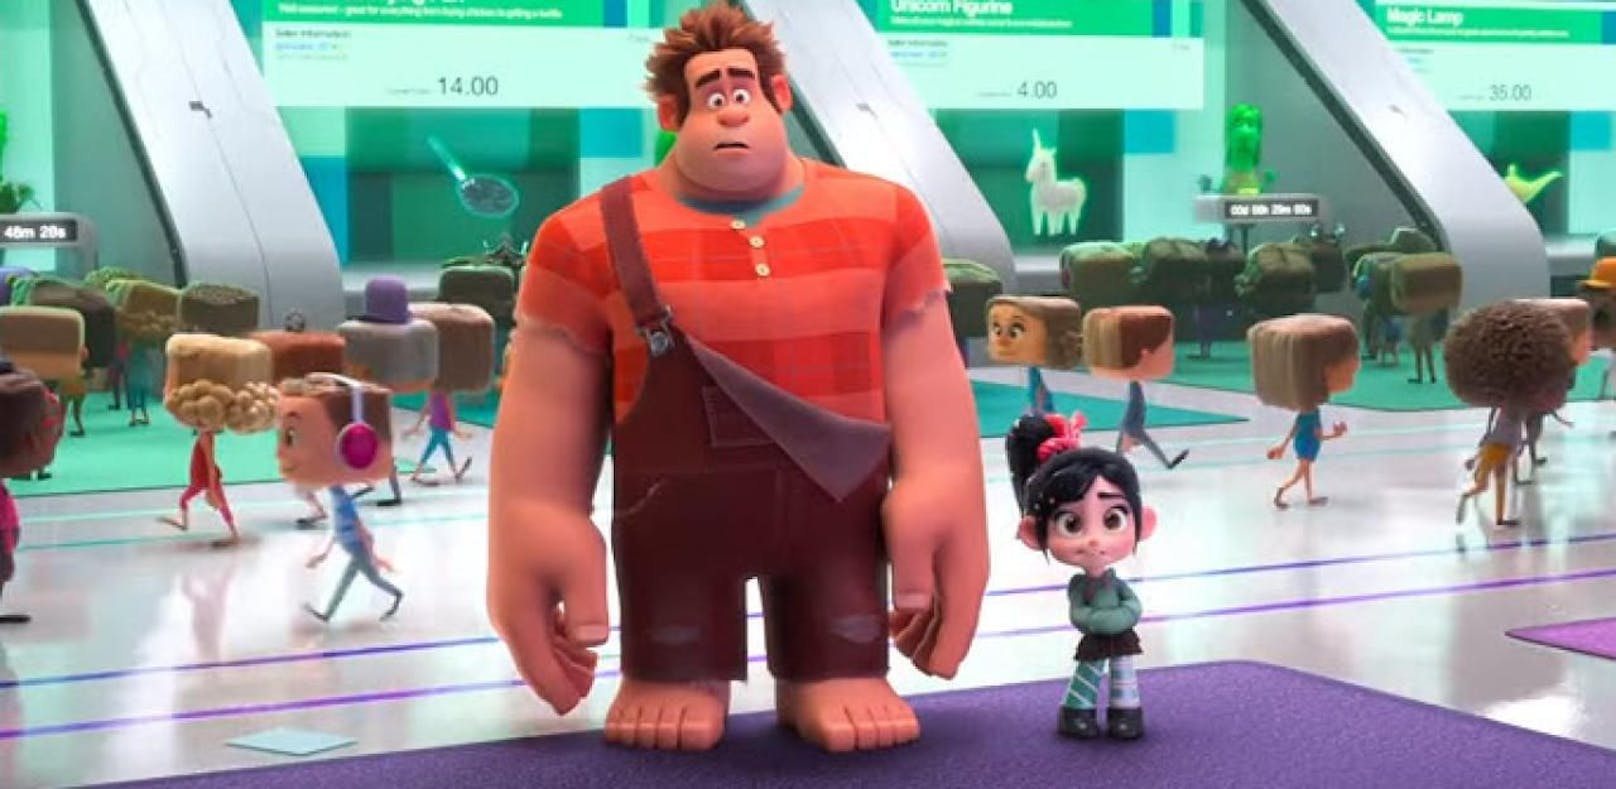 Wreck-it Ralph erobert im neuen Trailer das Internet